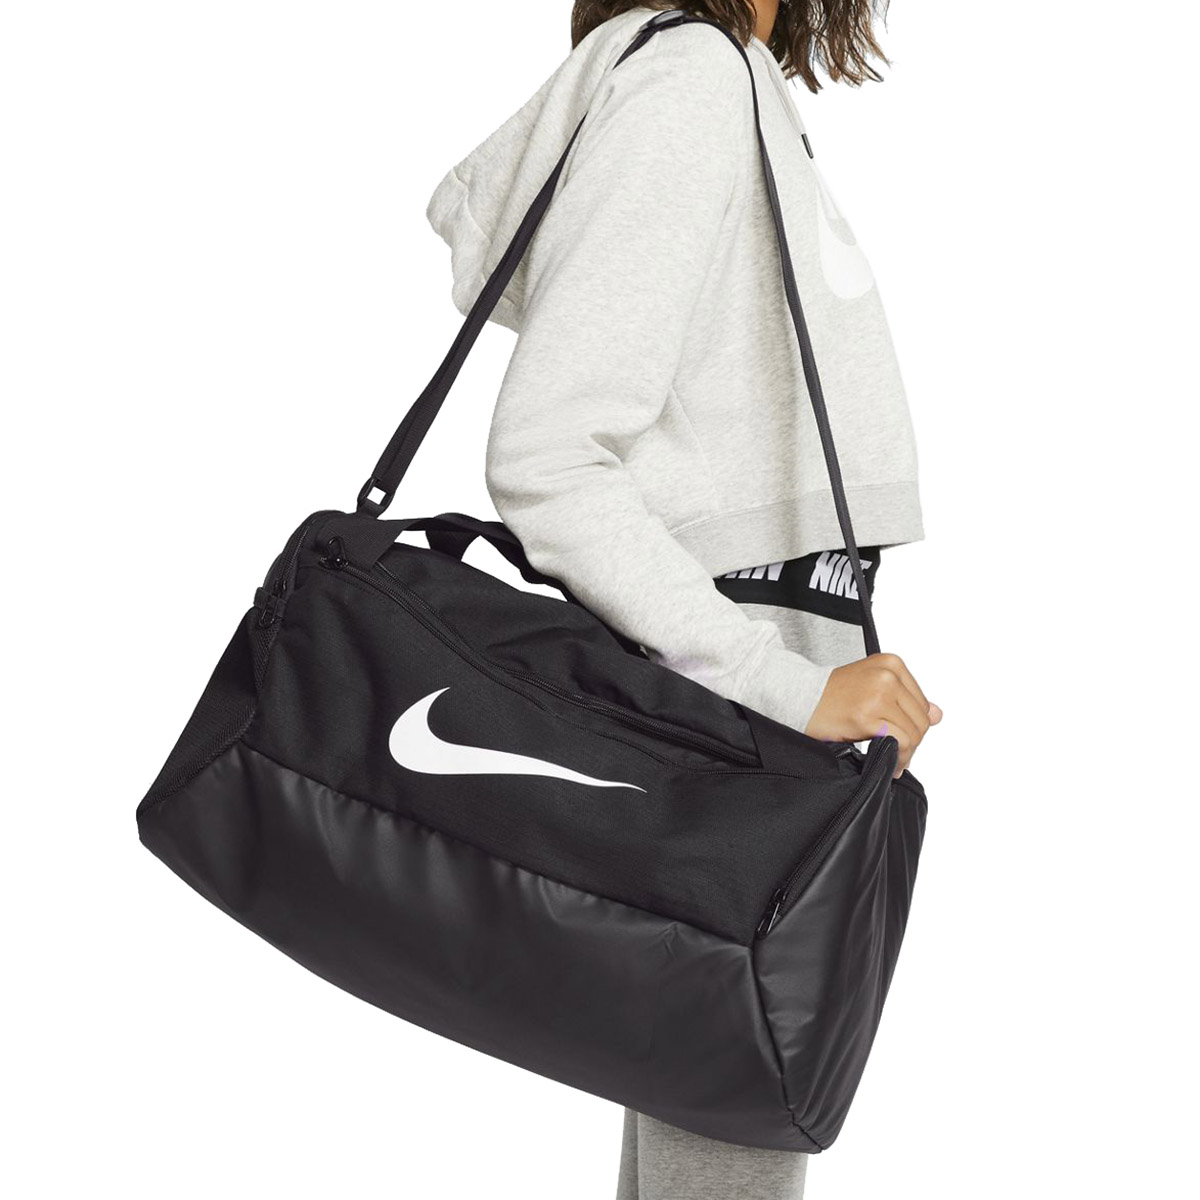 Nike Brasilia Bag, , large image number null